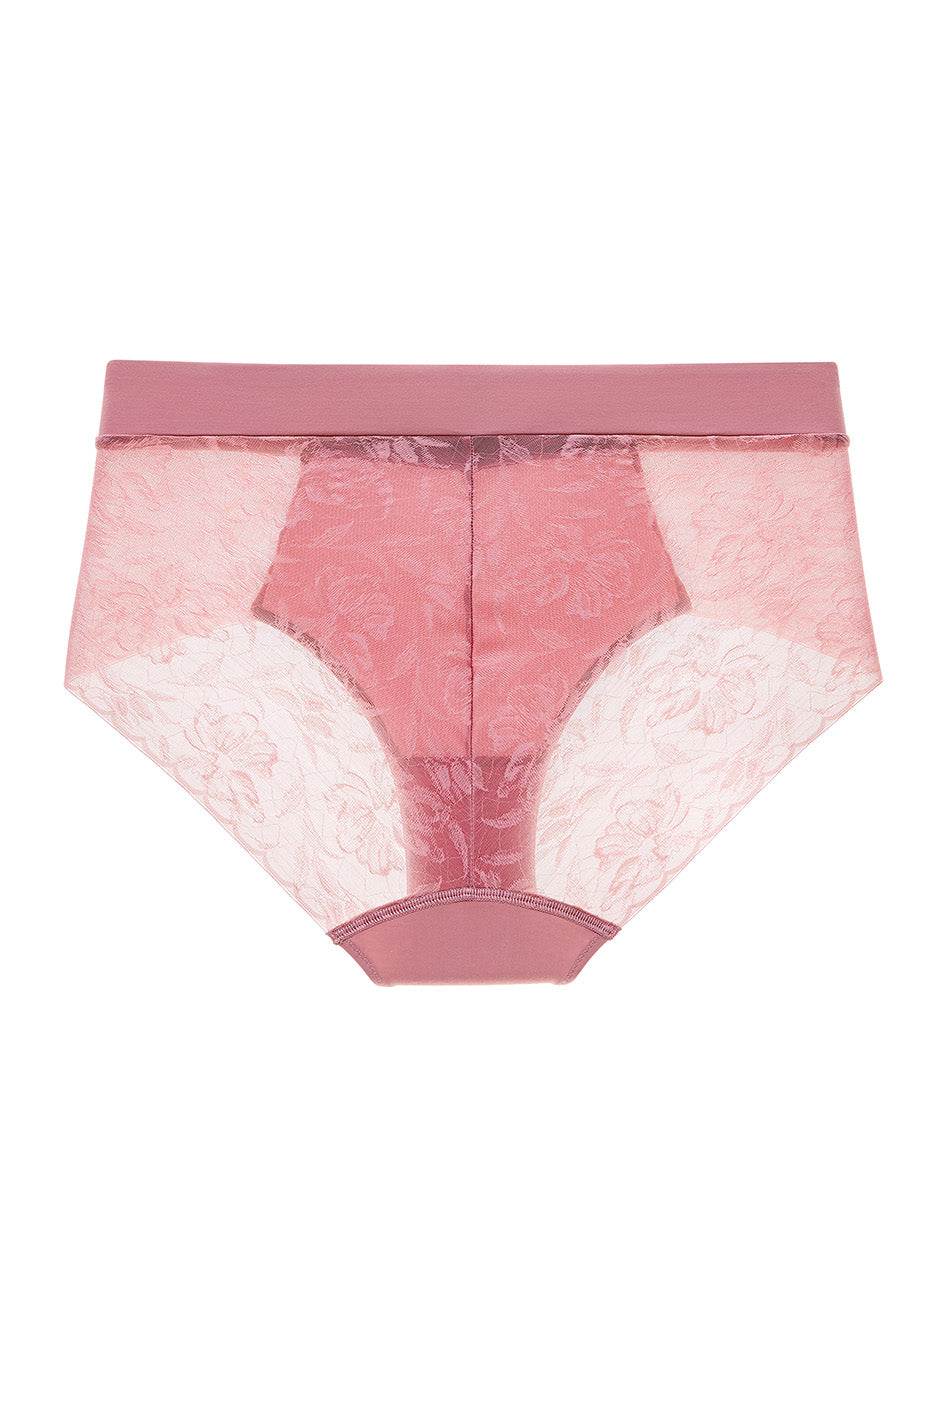 PPB 🌟Ready Stock 🌟Low Waist Panties Seamless 3D Honeycomb Women Underwear